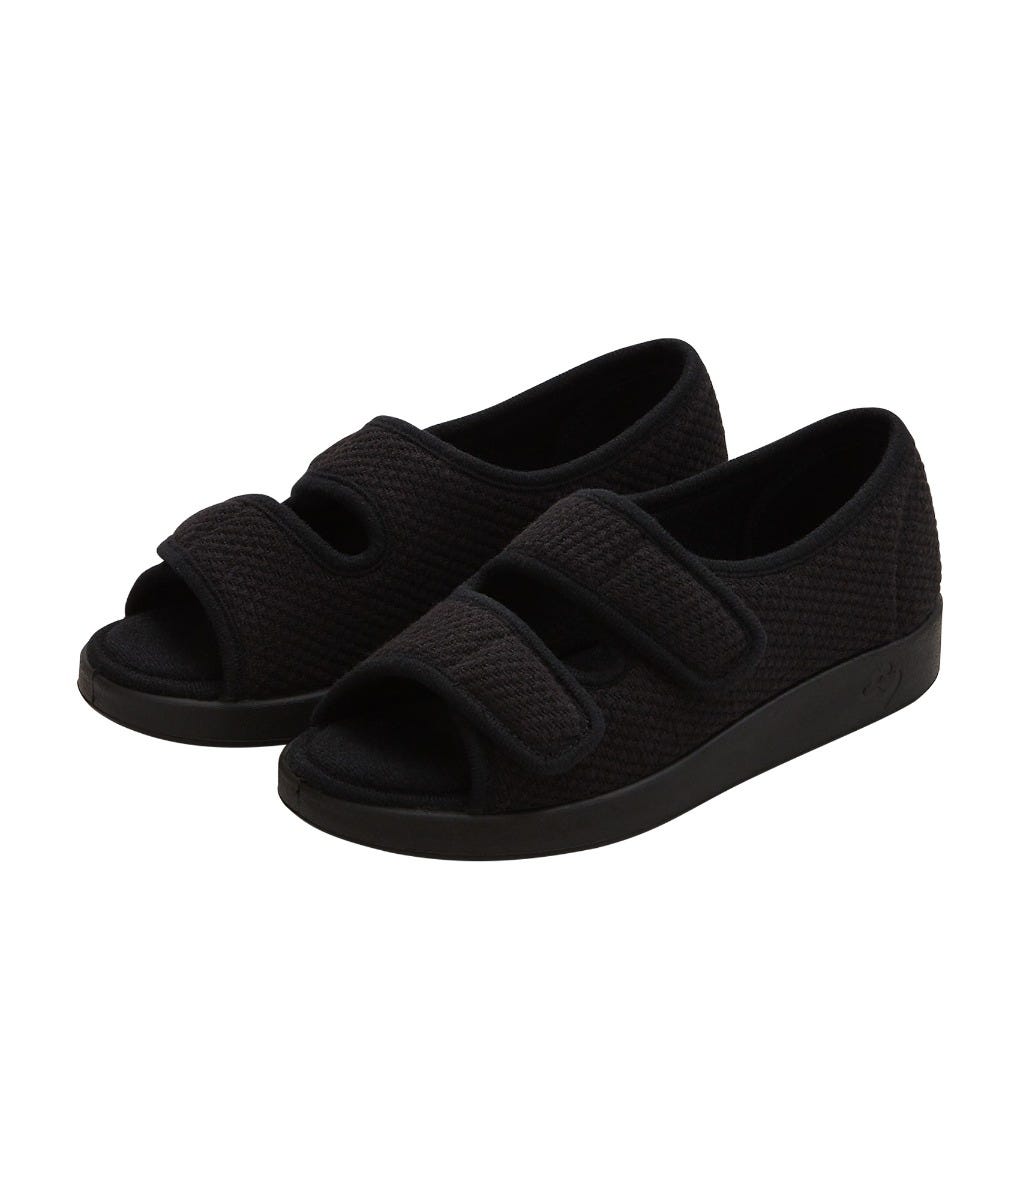 Silverts Women's Easy Closure Sandals - Black - 11